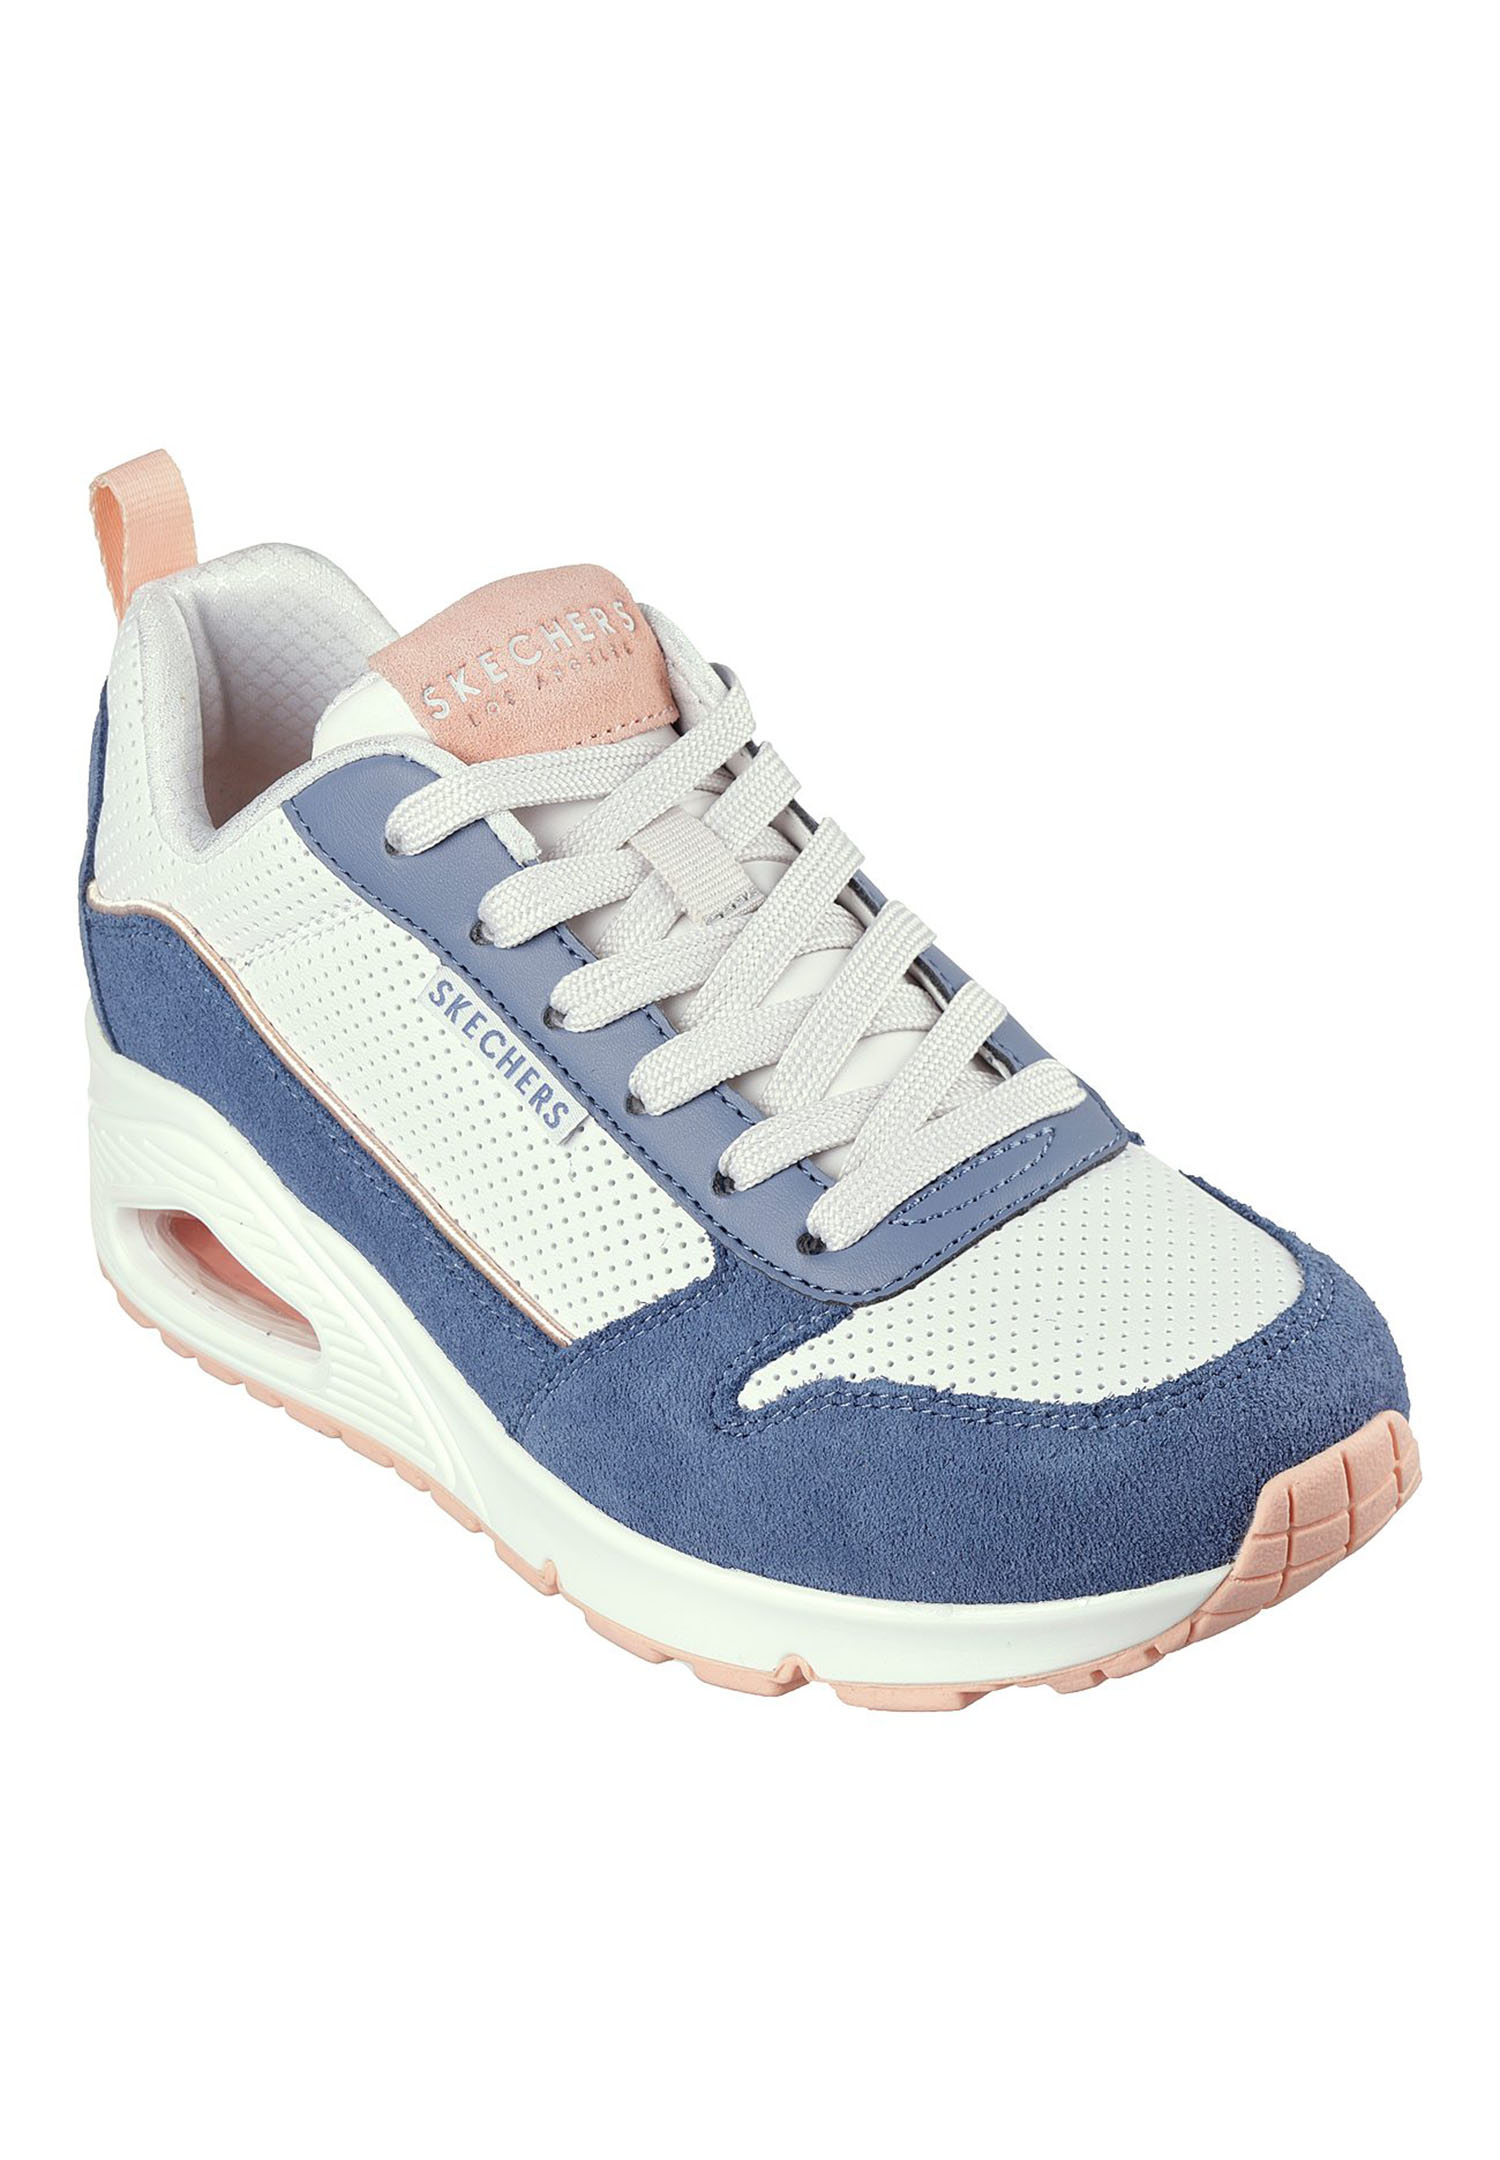 Skecher Street Uno-2 MUCH FUN Damen Sneaker 177105 WBLP blau/pink